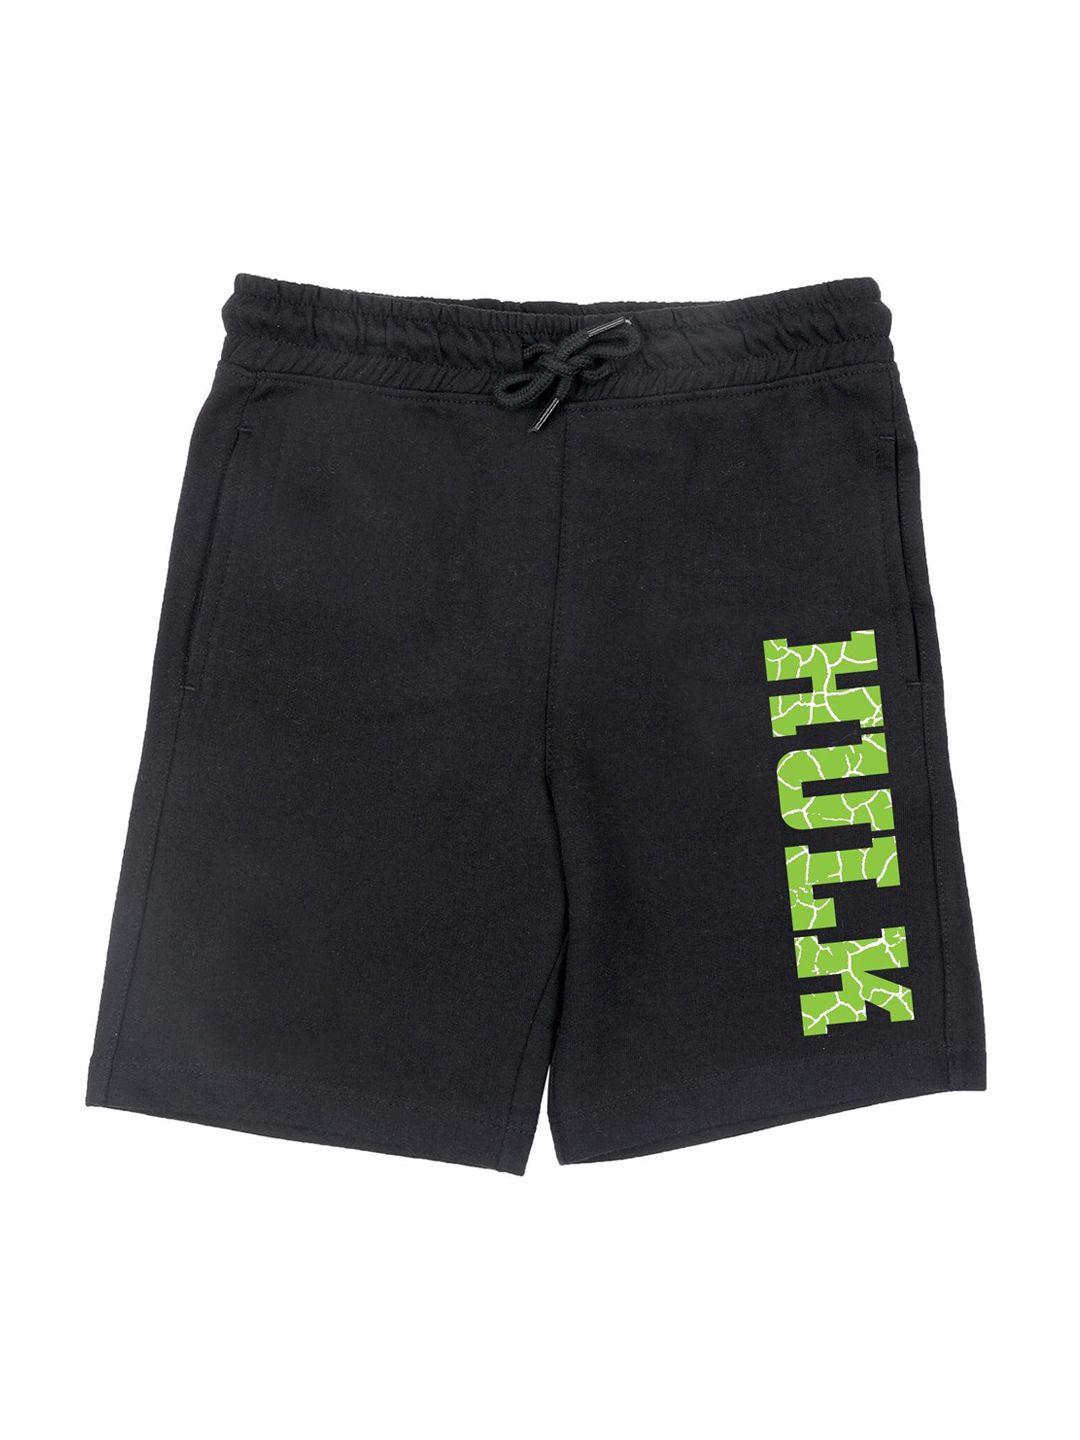 marvel by wear your mind boys black superhero printed hulk hot pants shorts